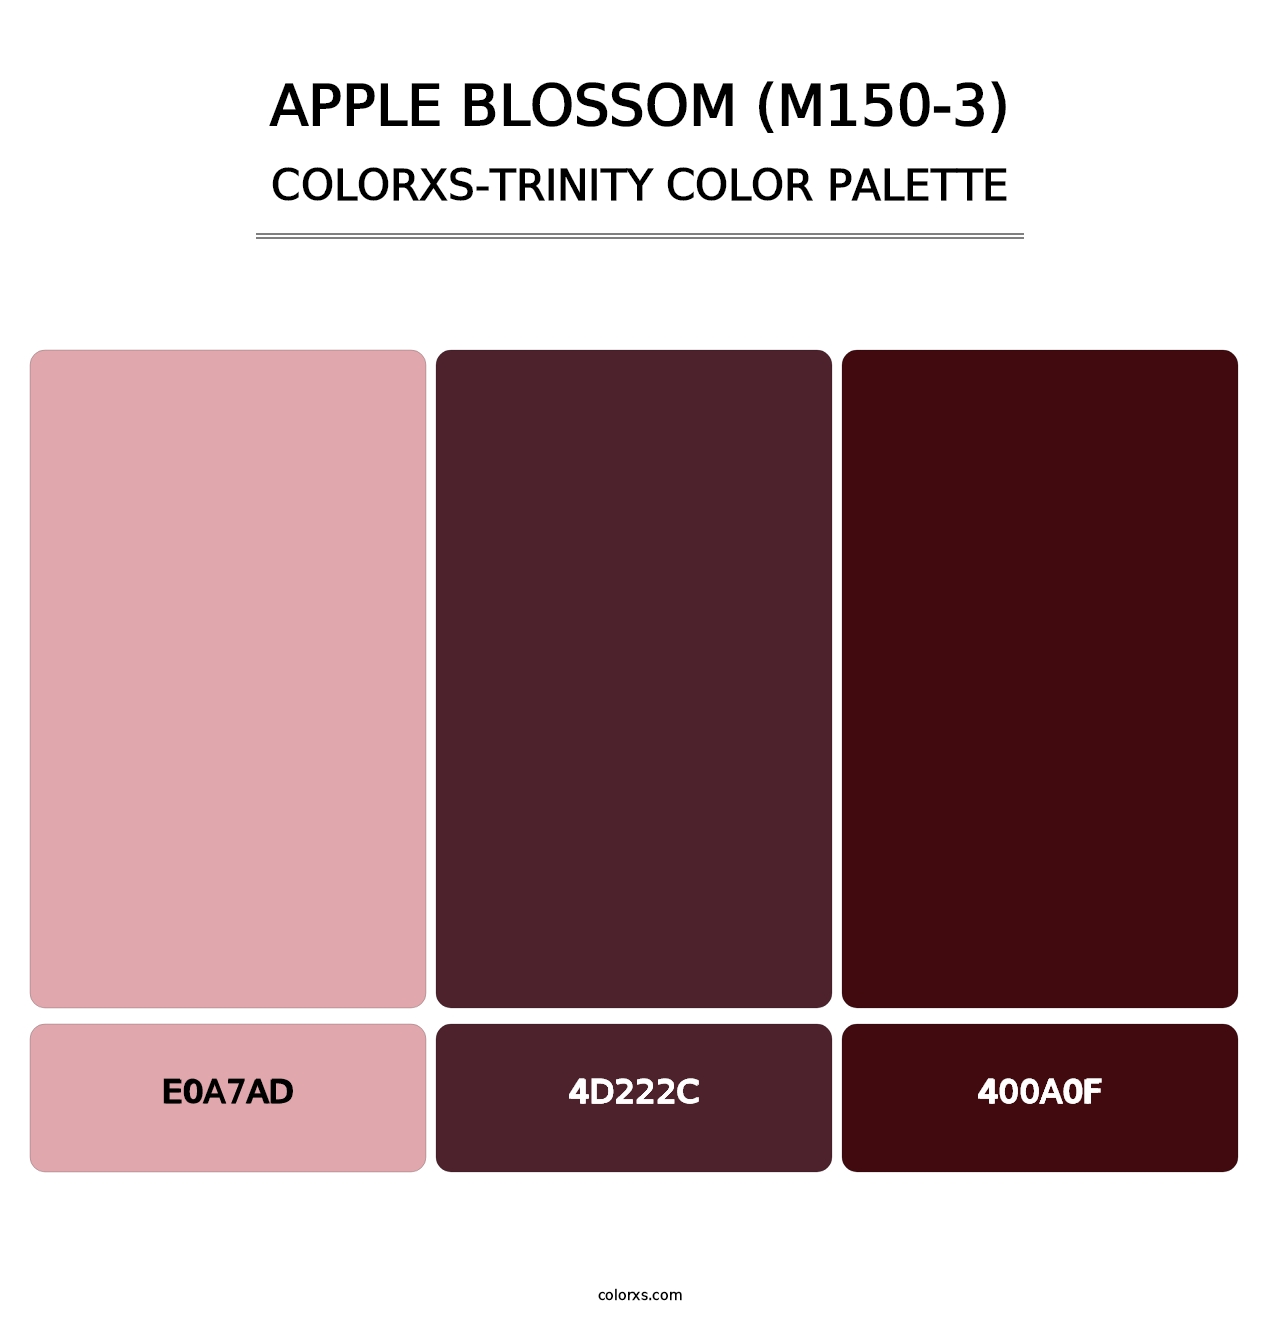 Apple Blossom (M150-3) - Colorxs Trinity Palette